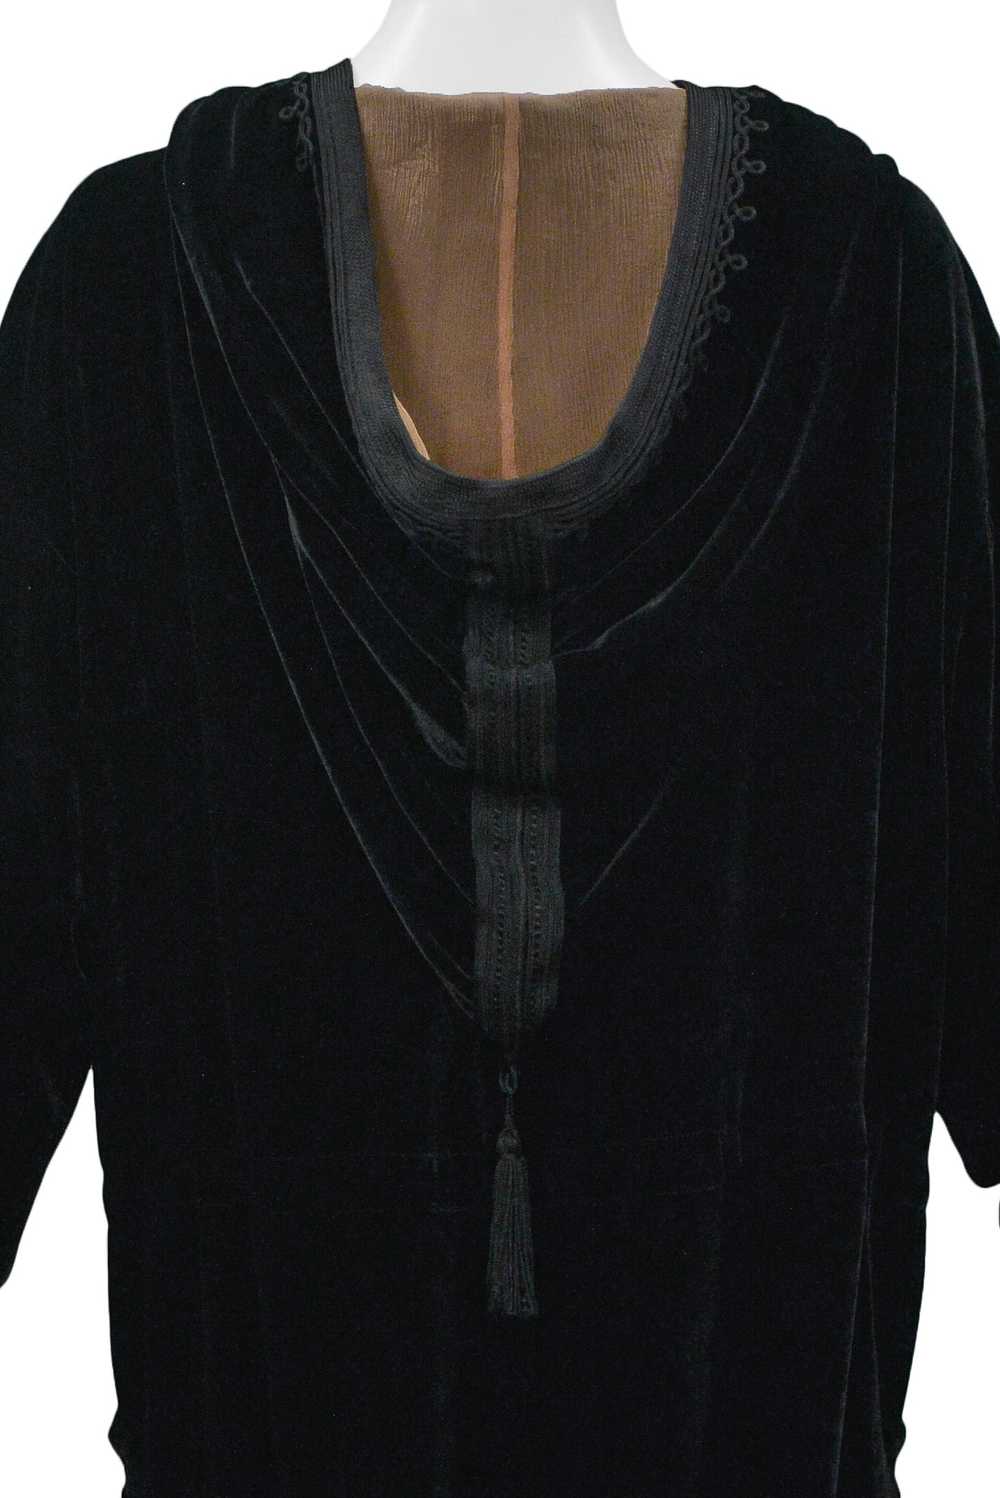 GAULTIER BLACK VELVET HOODIE TUNIC DRESS 2010 - image 7